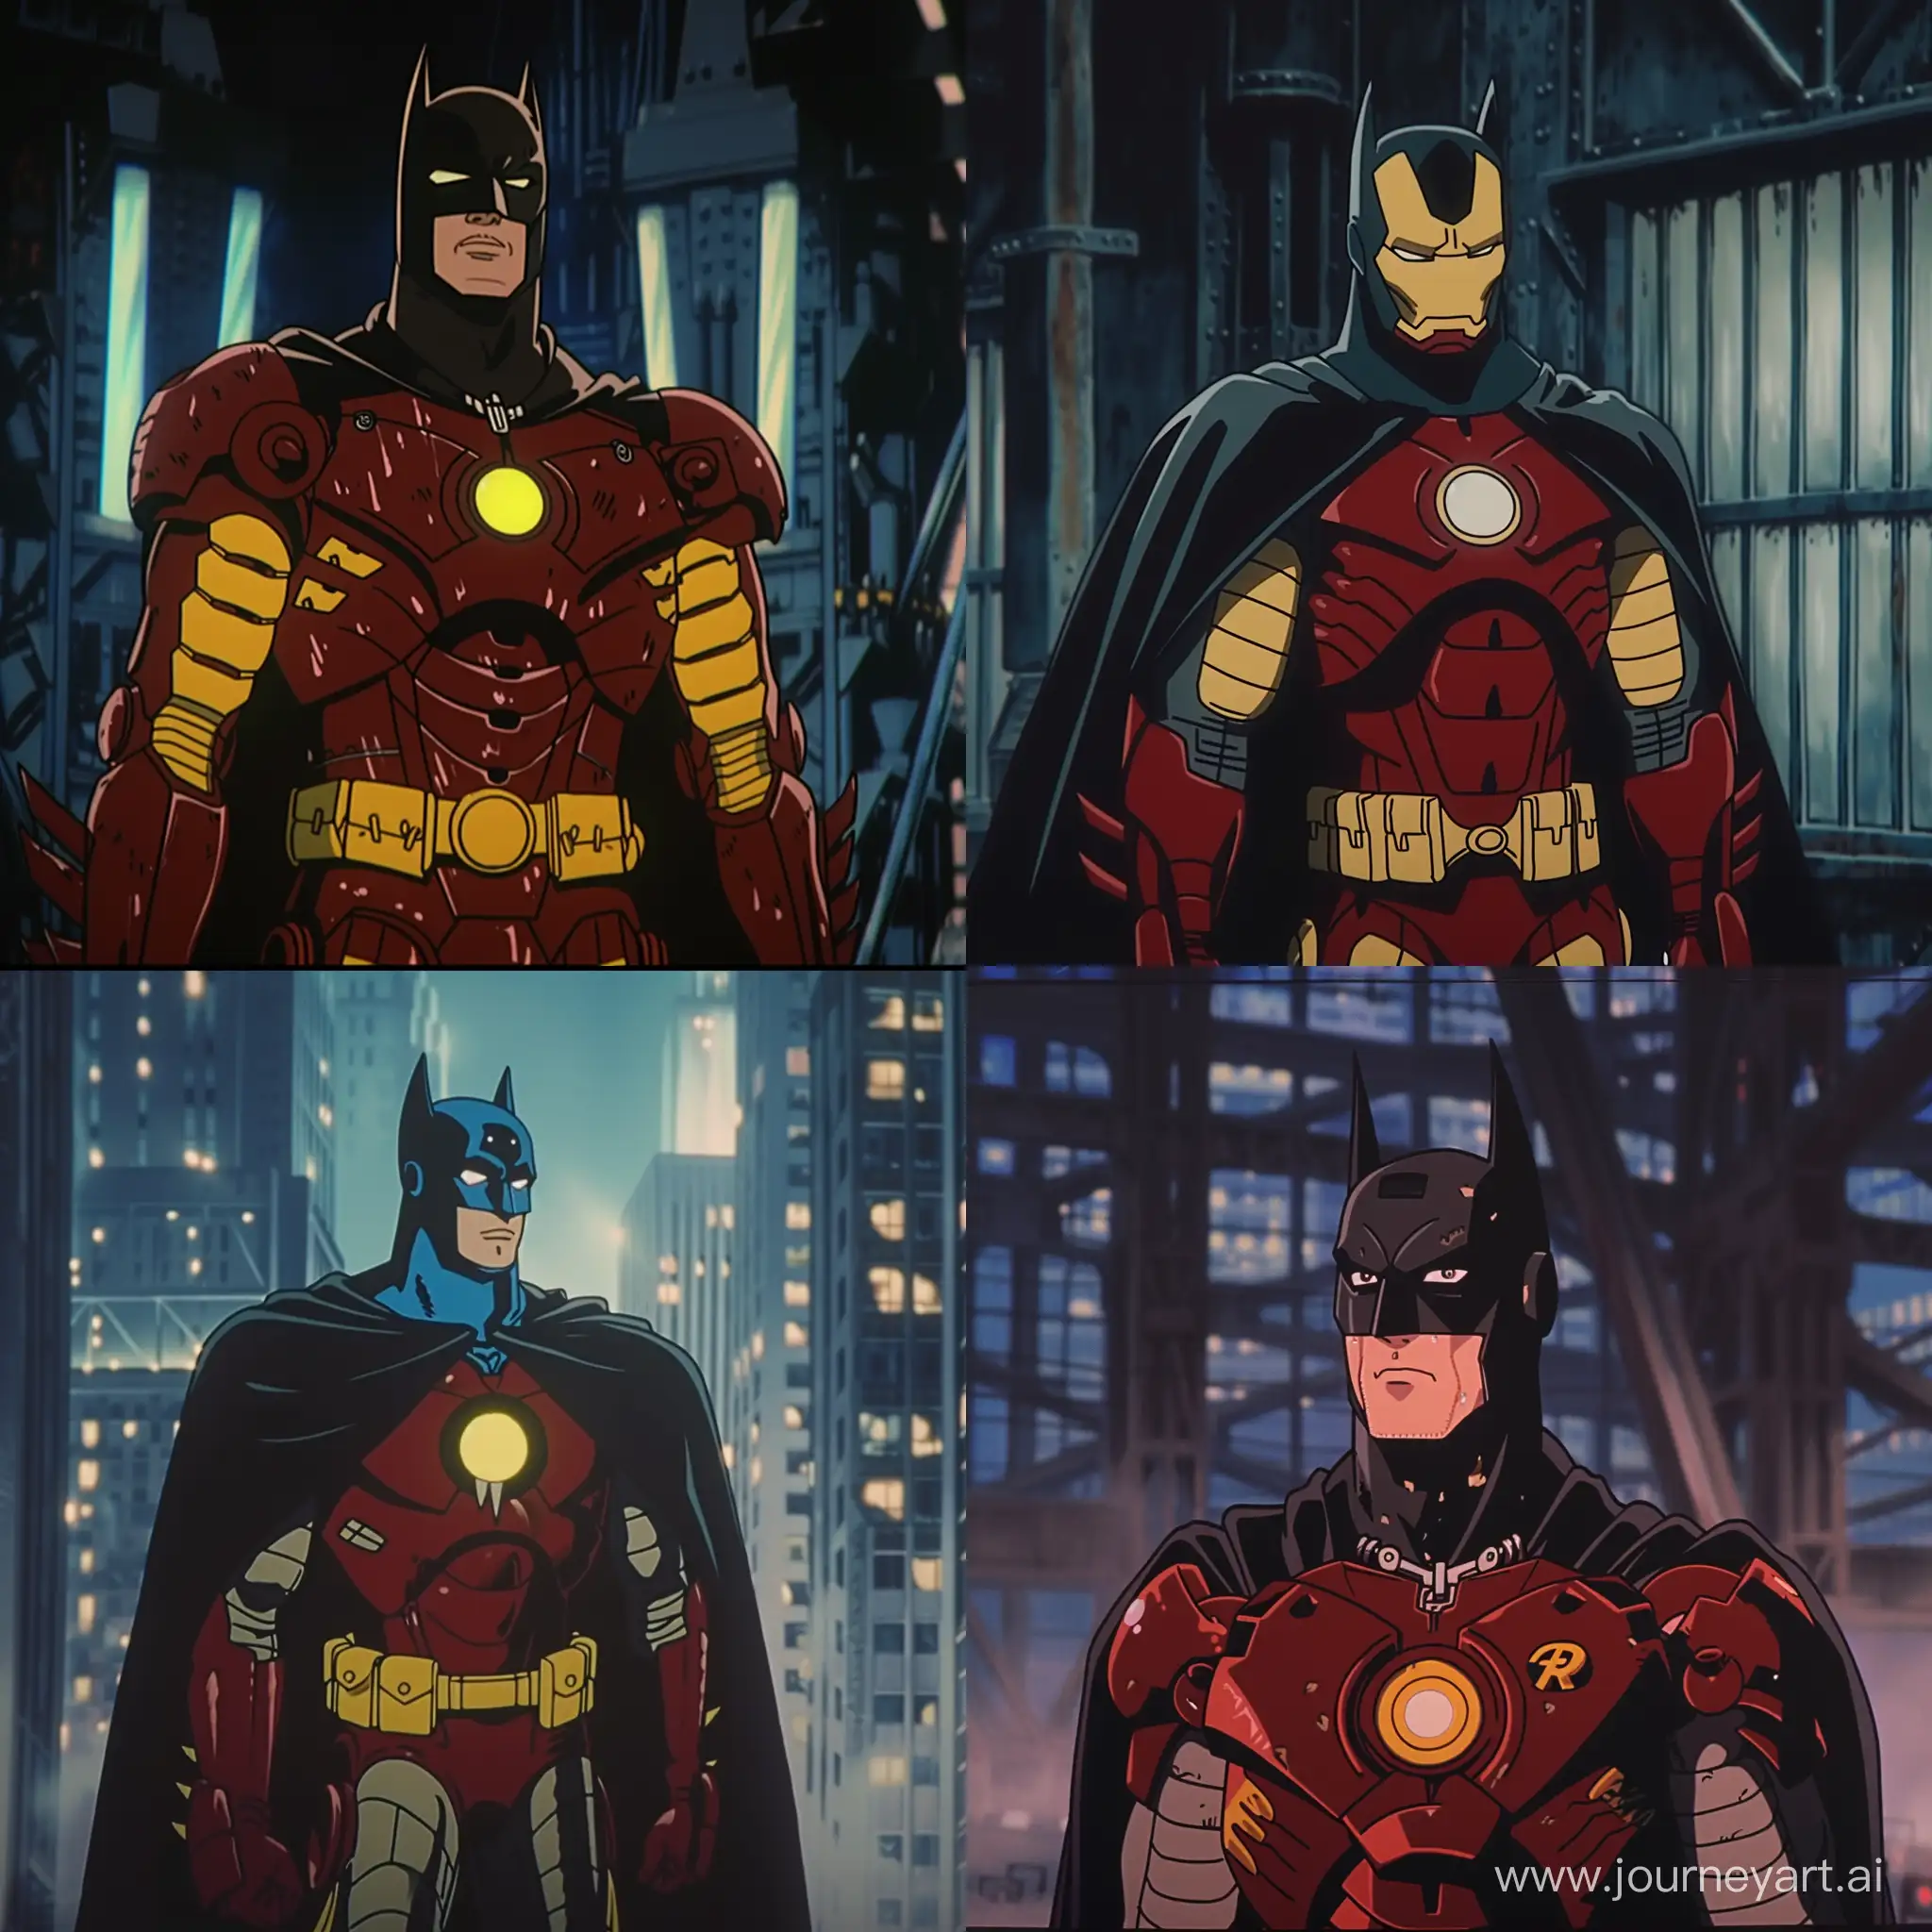 1980s-Anime-Fusion-Batman-in-Iron-Man-Costume